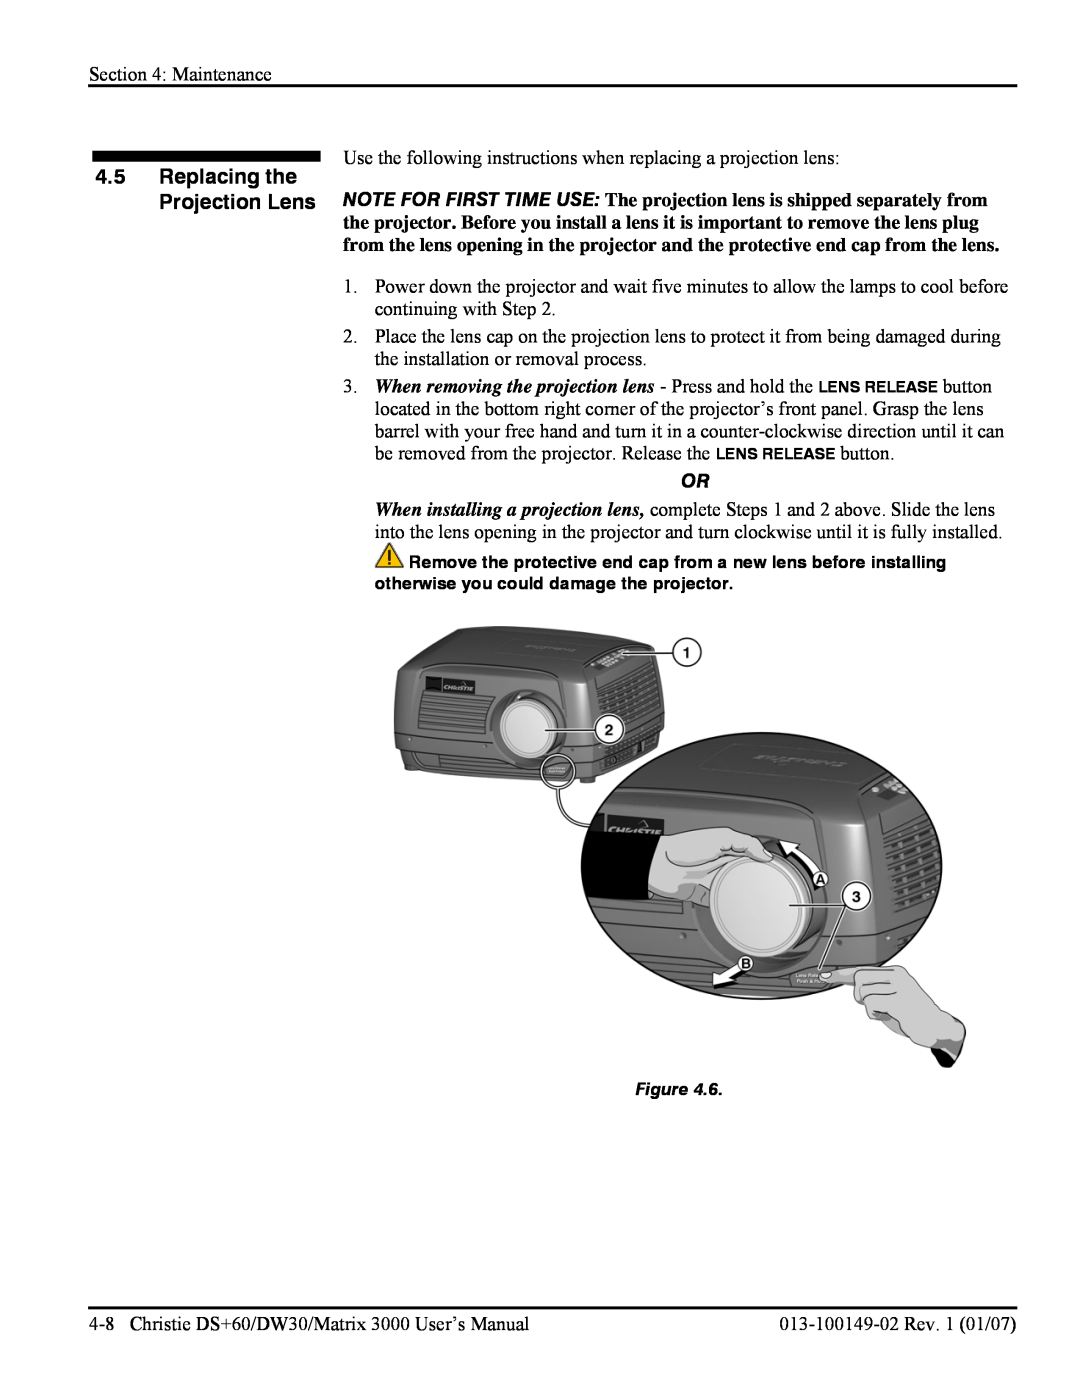 Texas Instruments DW30, MATRIX 3000 user manual Replacing the Projection Lens 